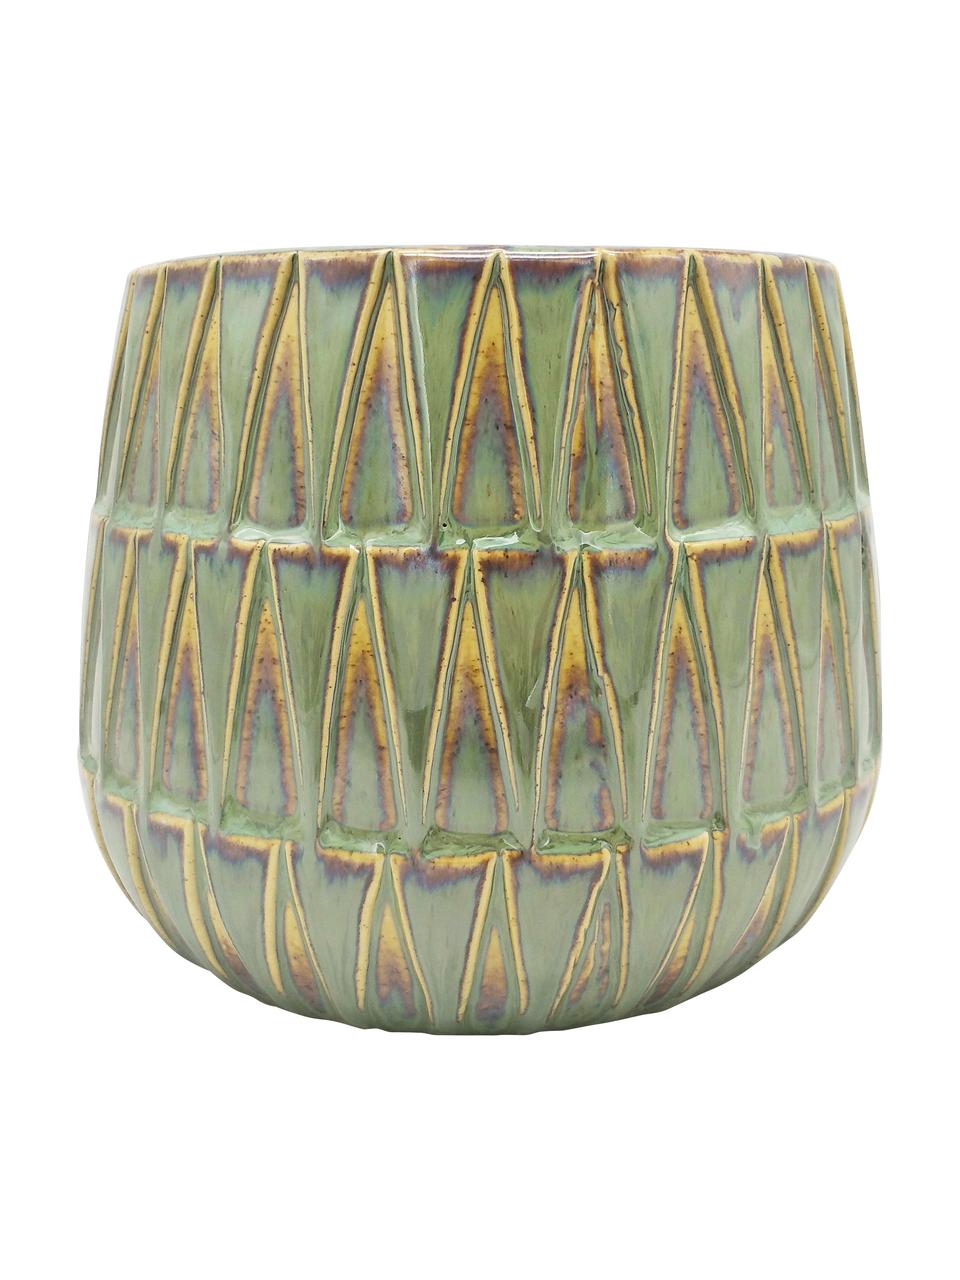 Keramická váza Nomad, Keramika, Zelená, žlutá, Ø 19 cm, V 15 cm